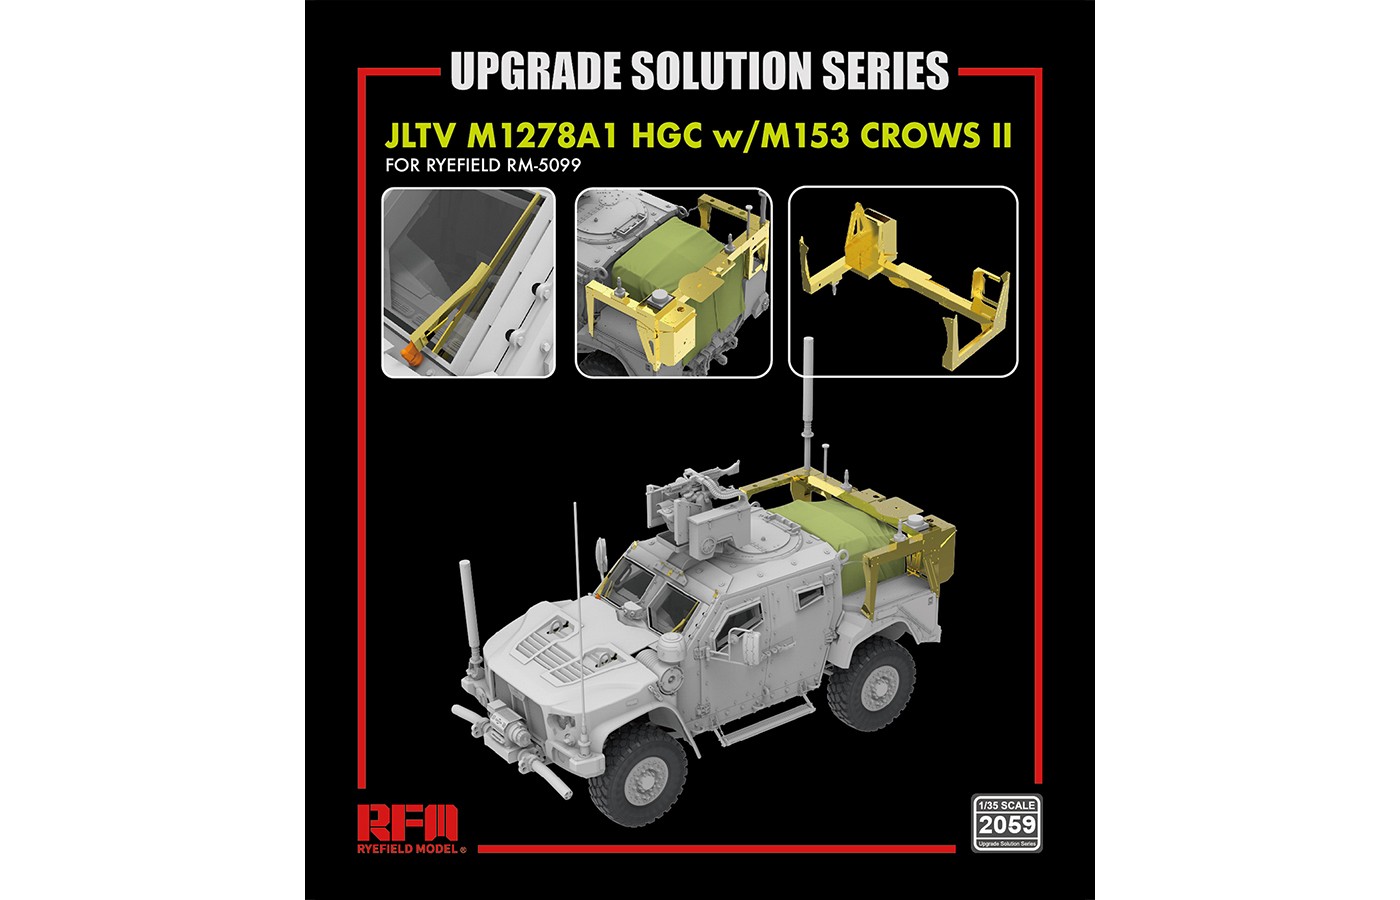 RM-2059 JLTV M1278A1 HGC W/M153 CROWS II  UPGRADE SOLUTION SERIES